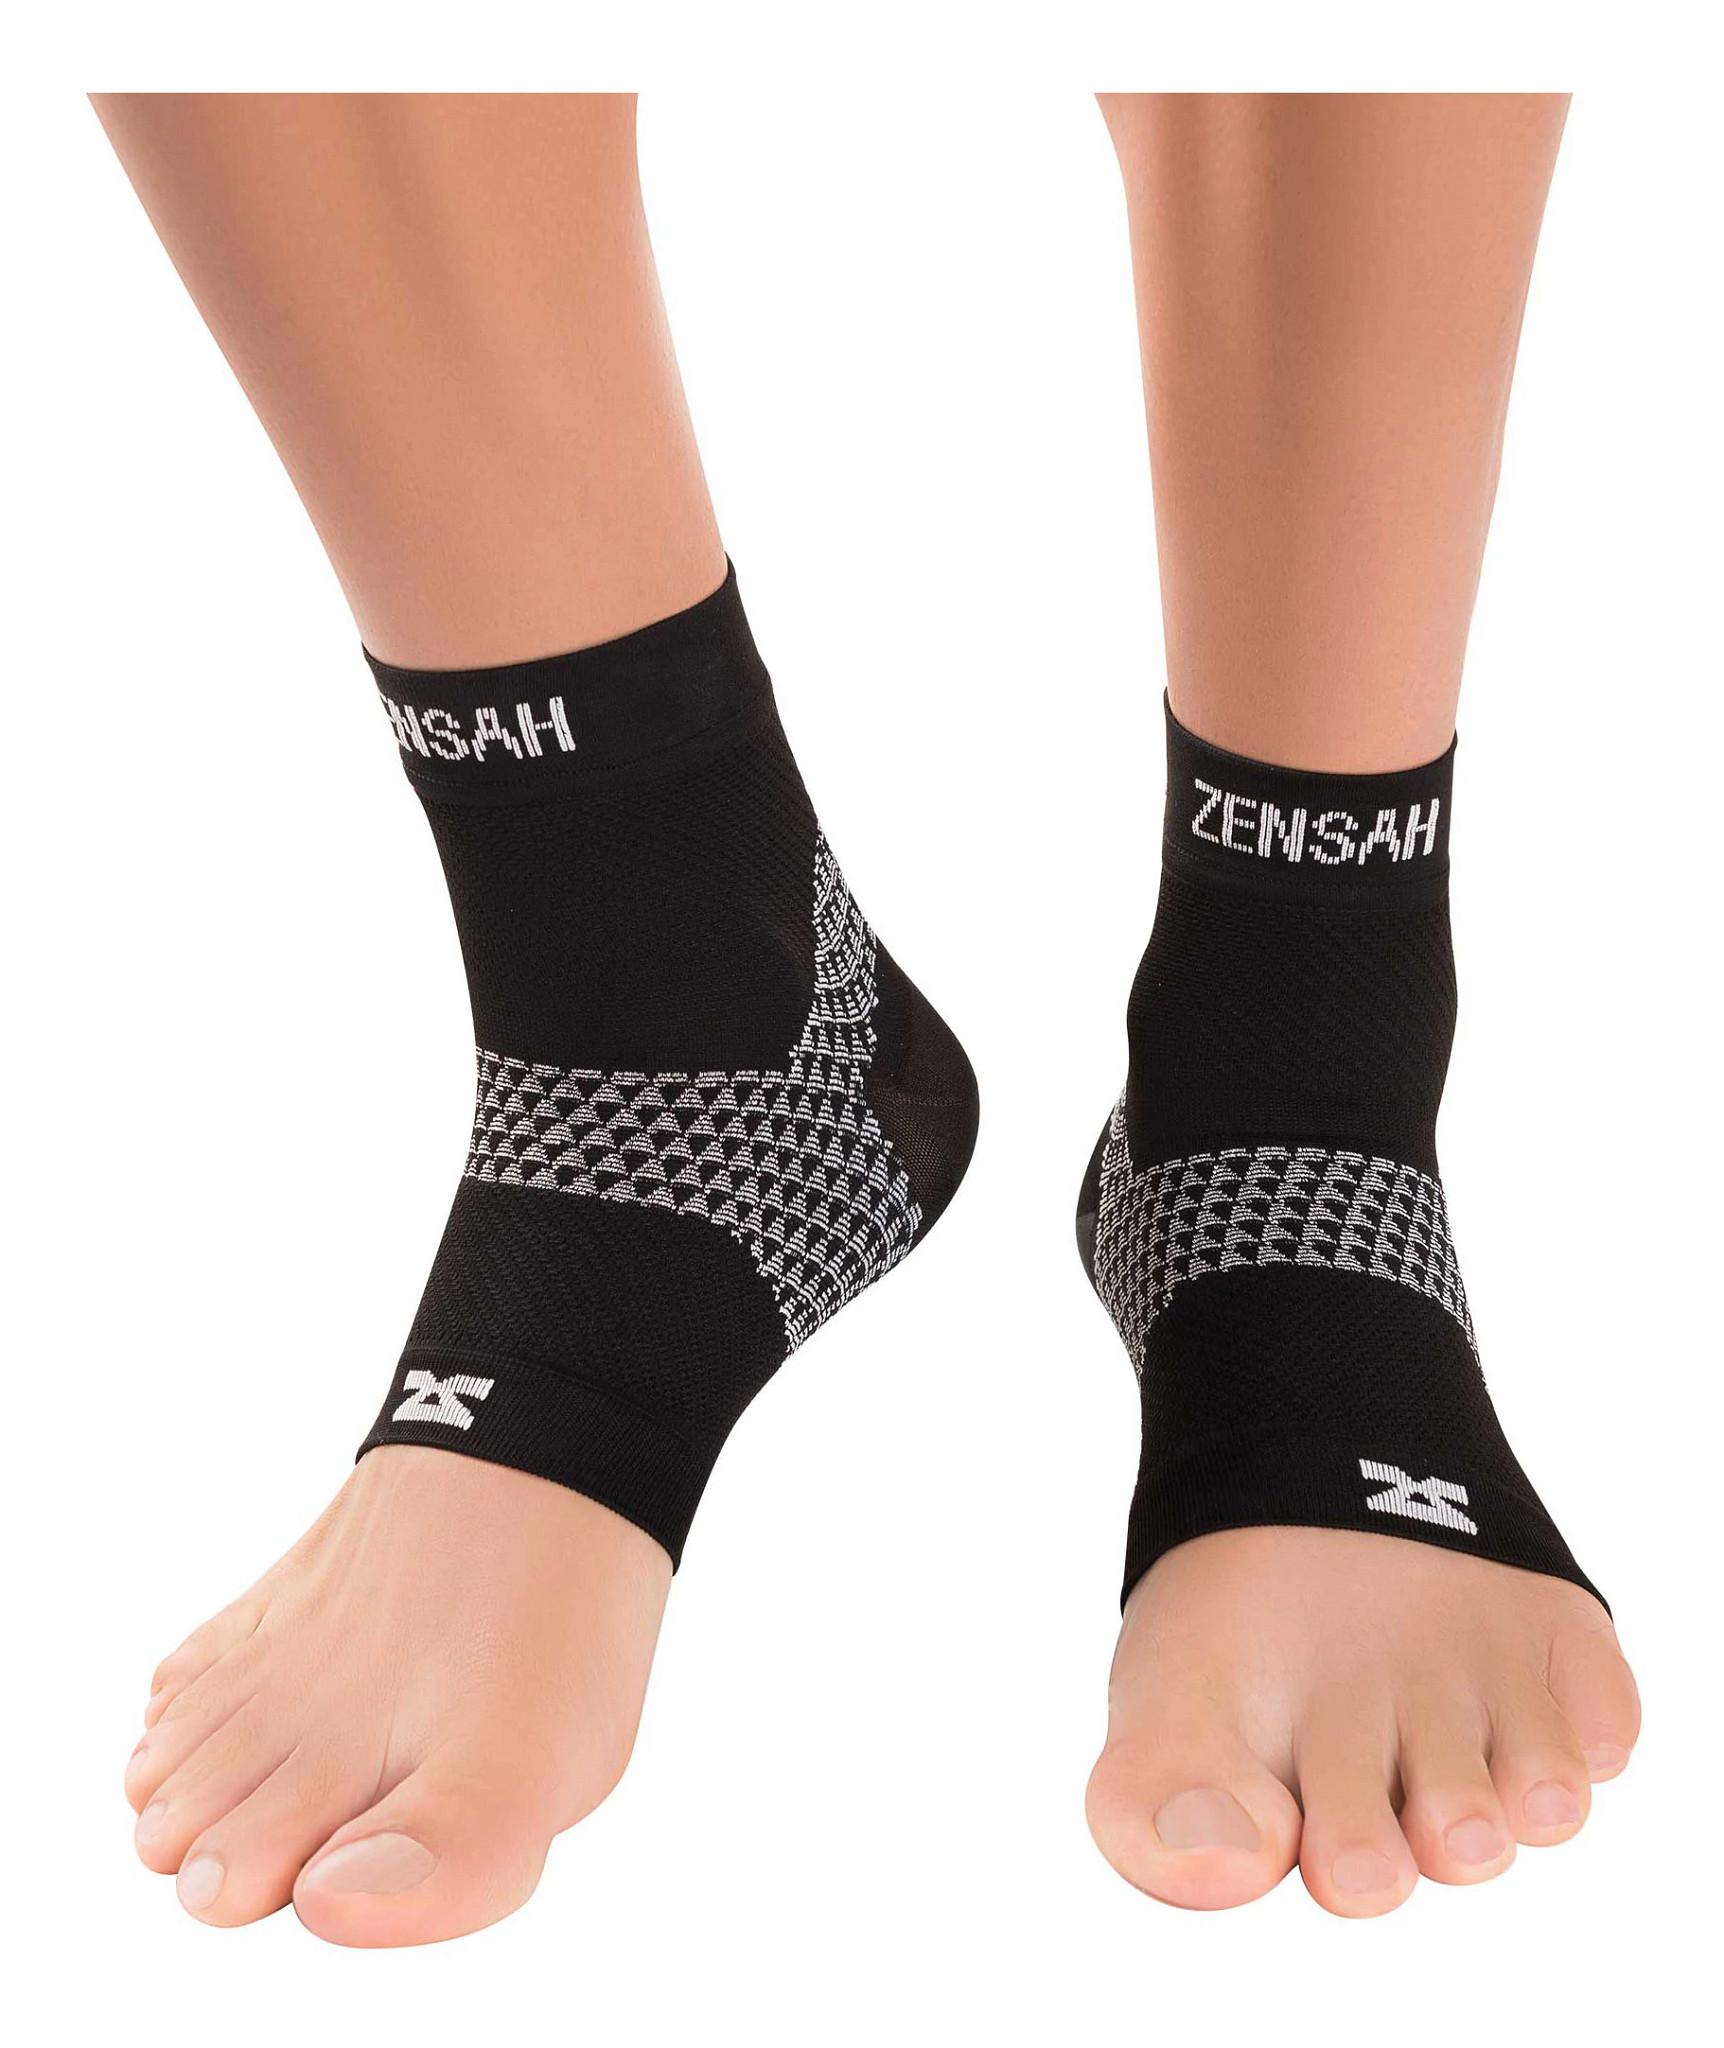 Zensah Accessories, Compression Socks, Athletic Compression Gear